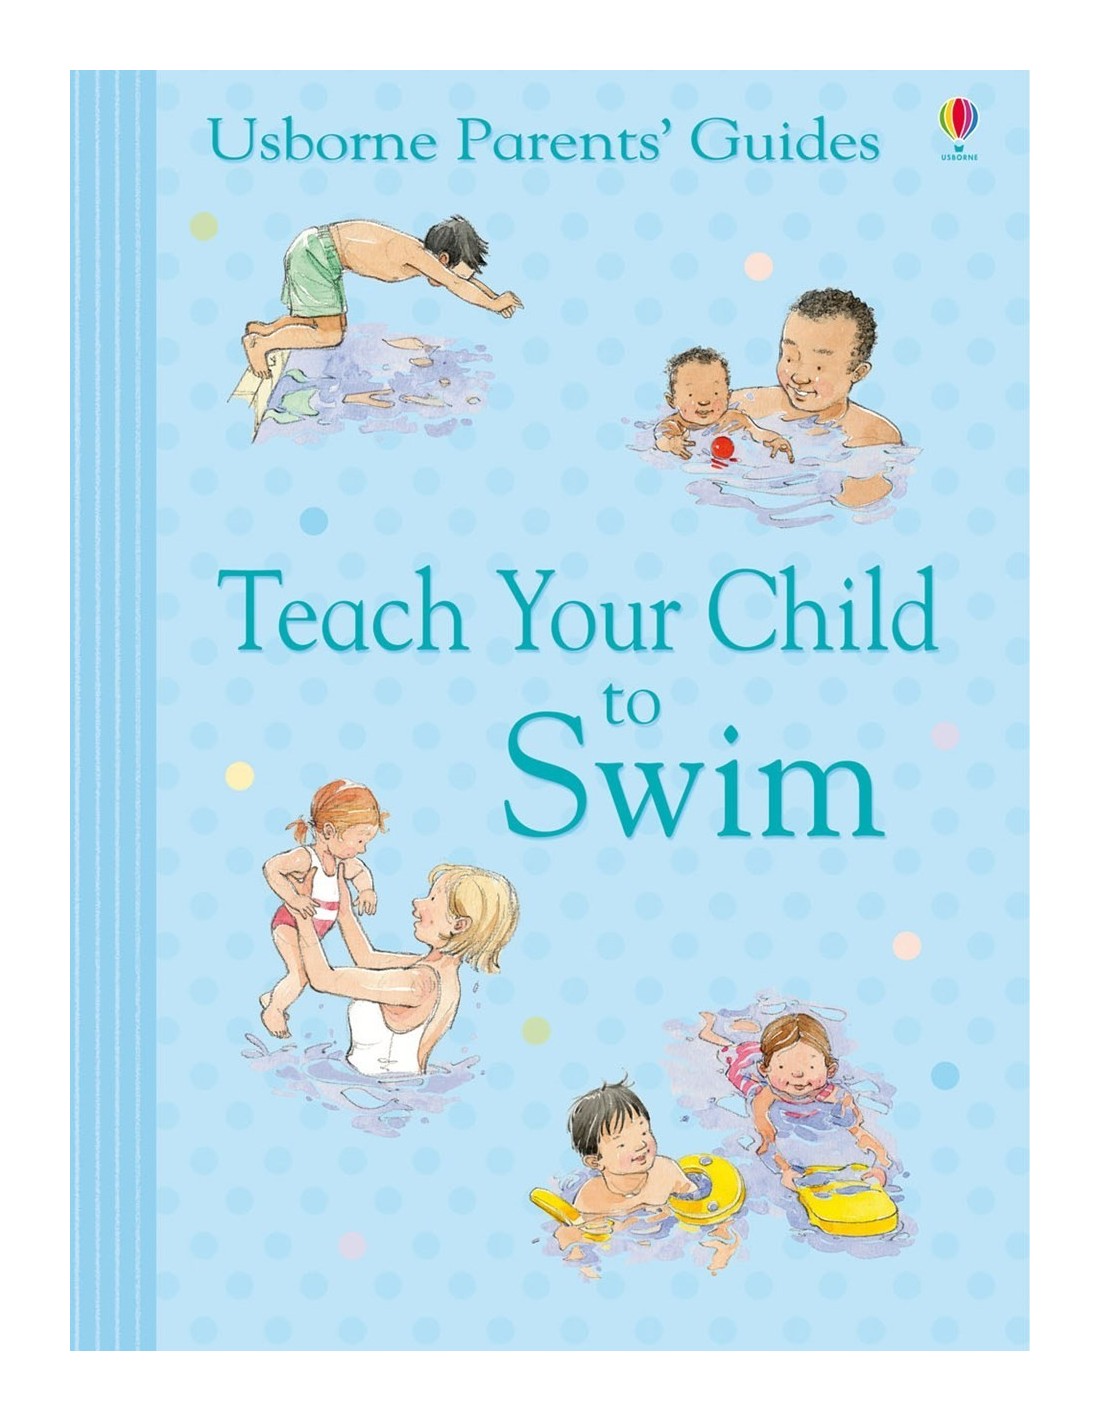 Teach your child to swim